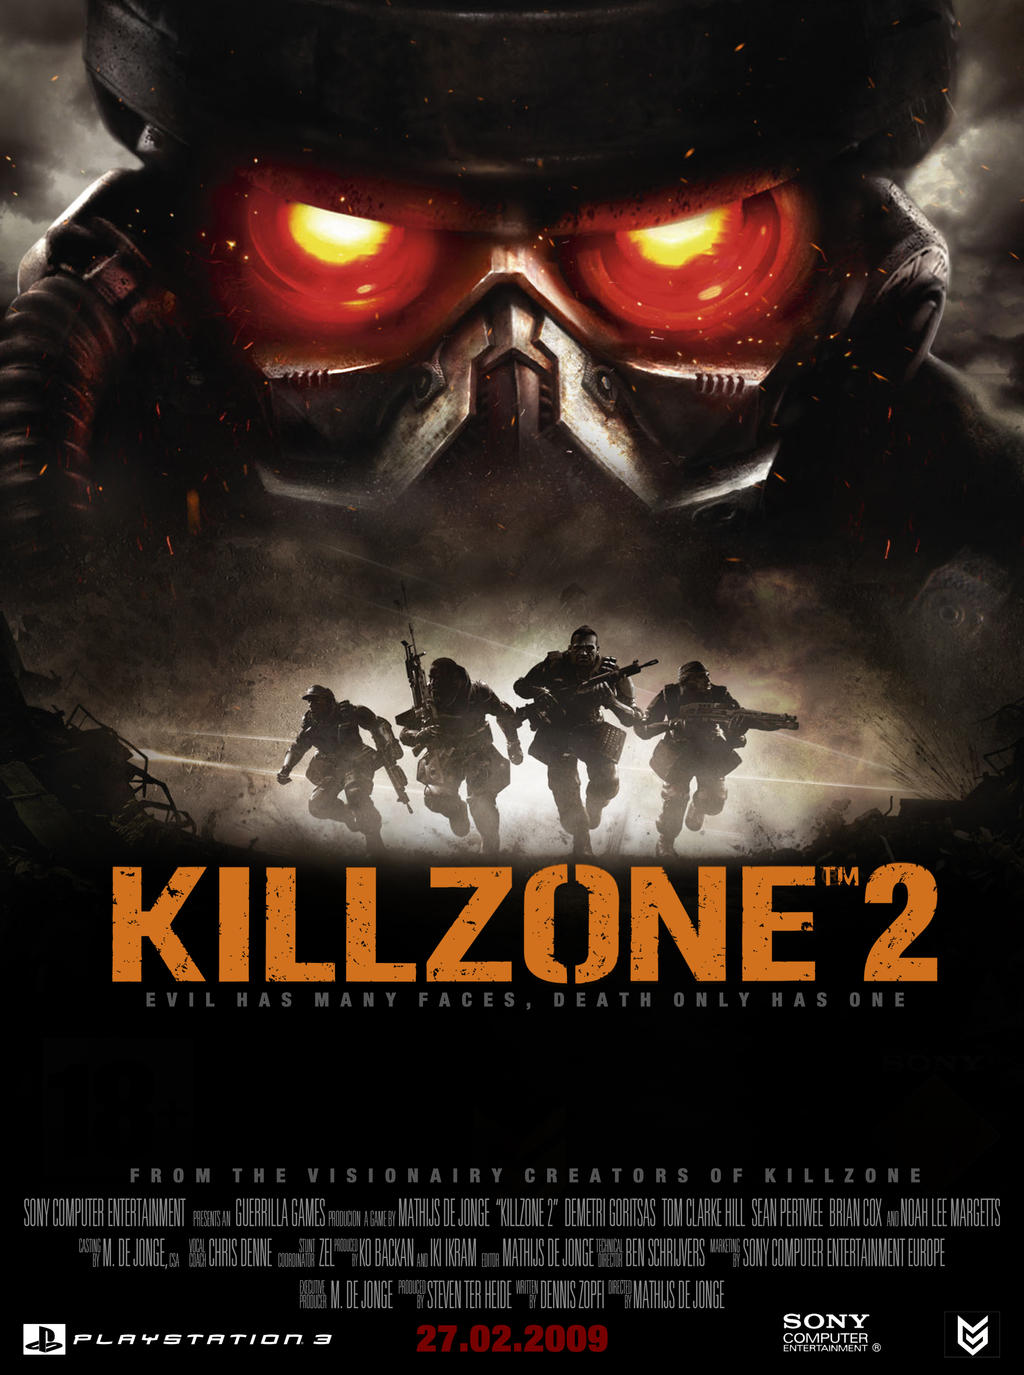 Killzone 3 by PatrickBrown on DeviantArt